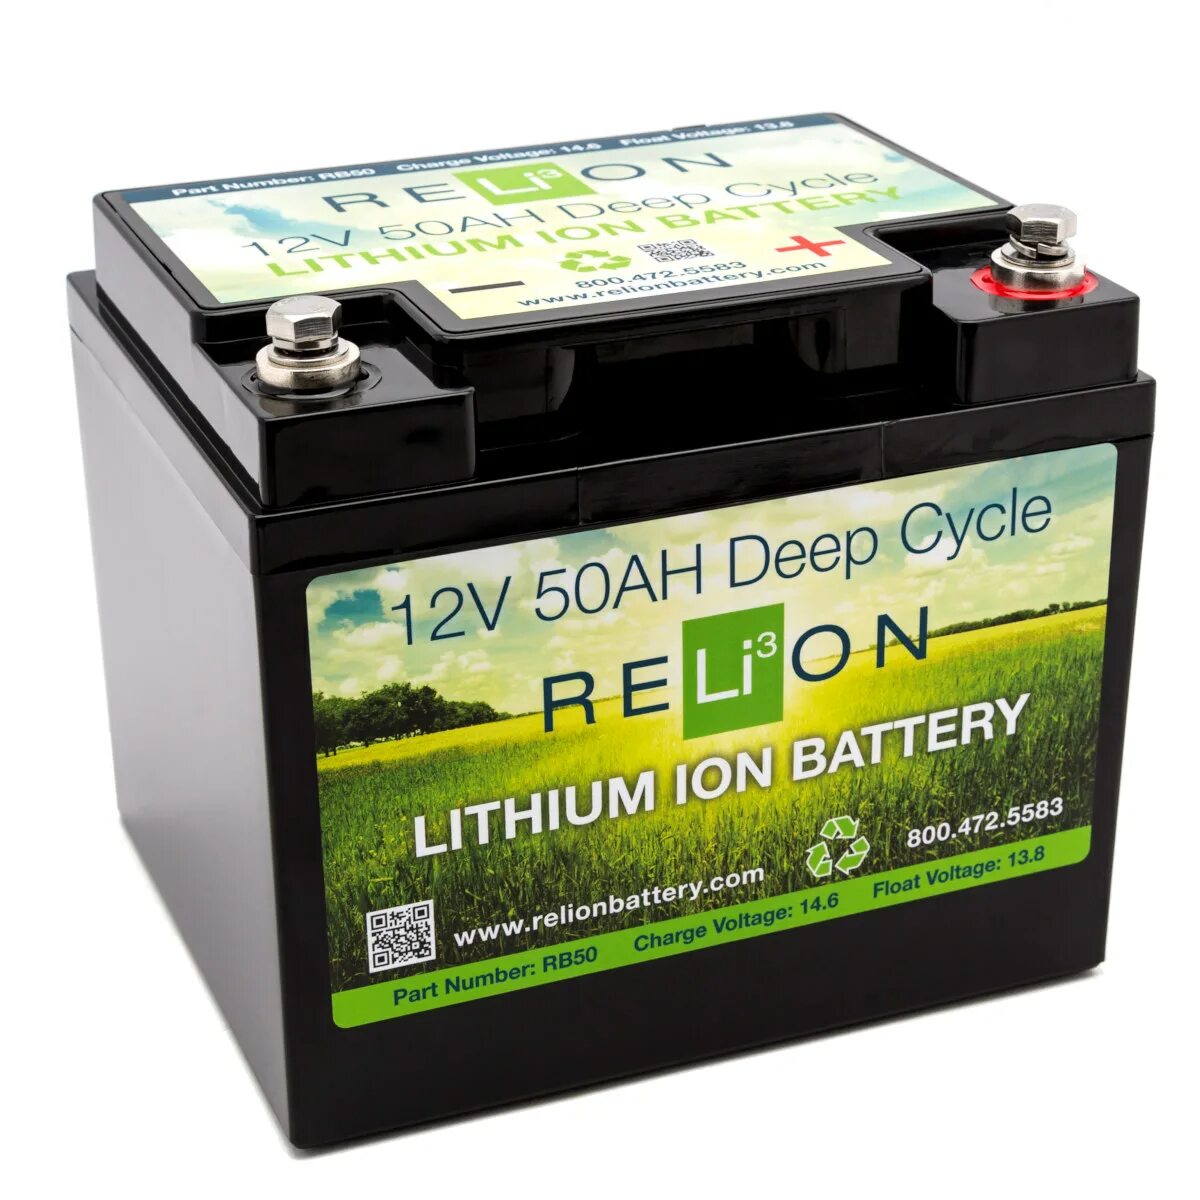 Автомобильные аккумуляторы литиевые. Литий-железо-фосфатная аккумуляторная батарея,. Аккумулятор автомобильный литий-ионный 12v. Lithium Battery 12v. Литий железофосфатные аккумуляторы.